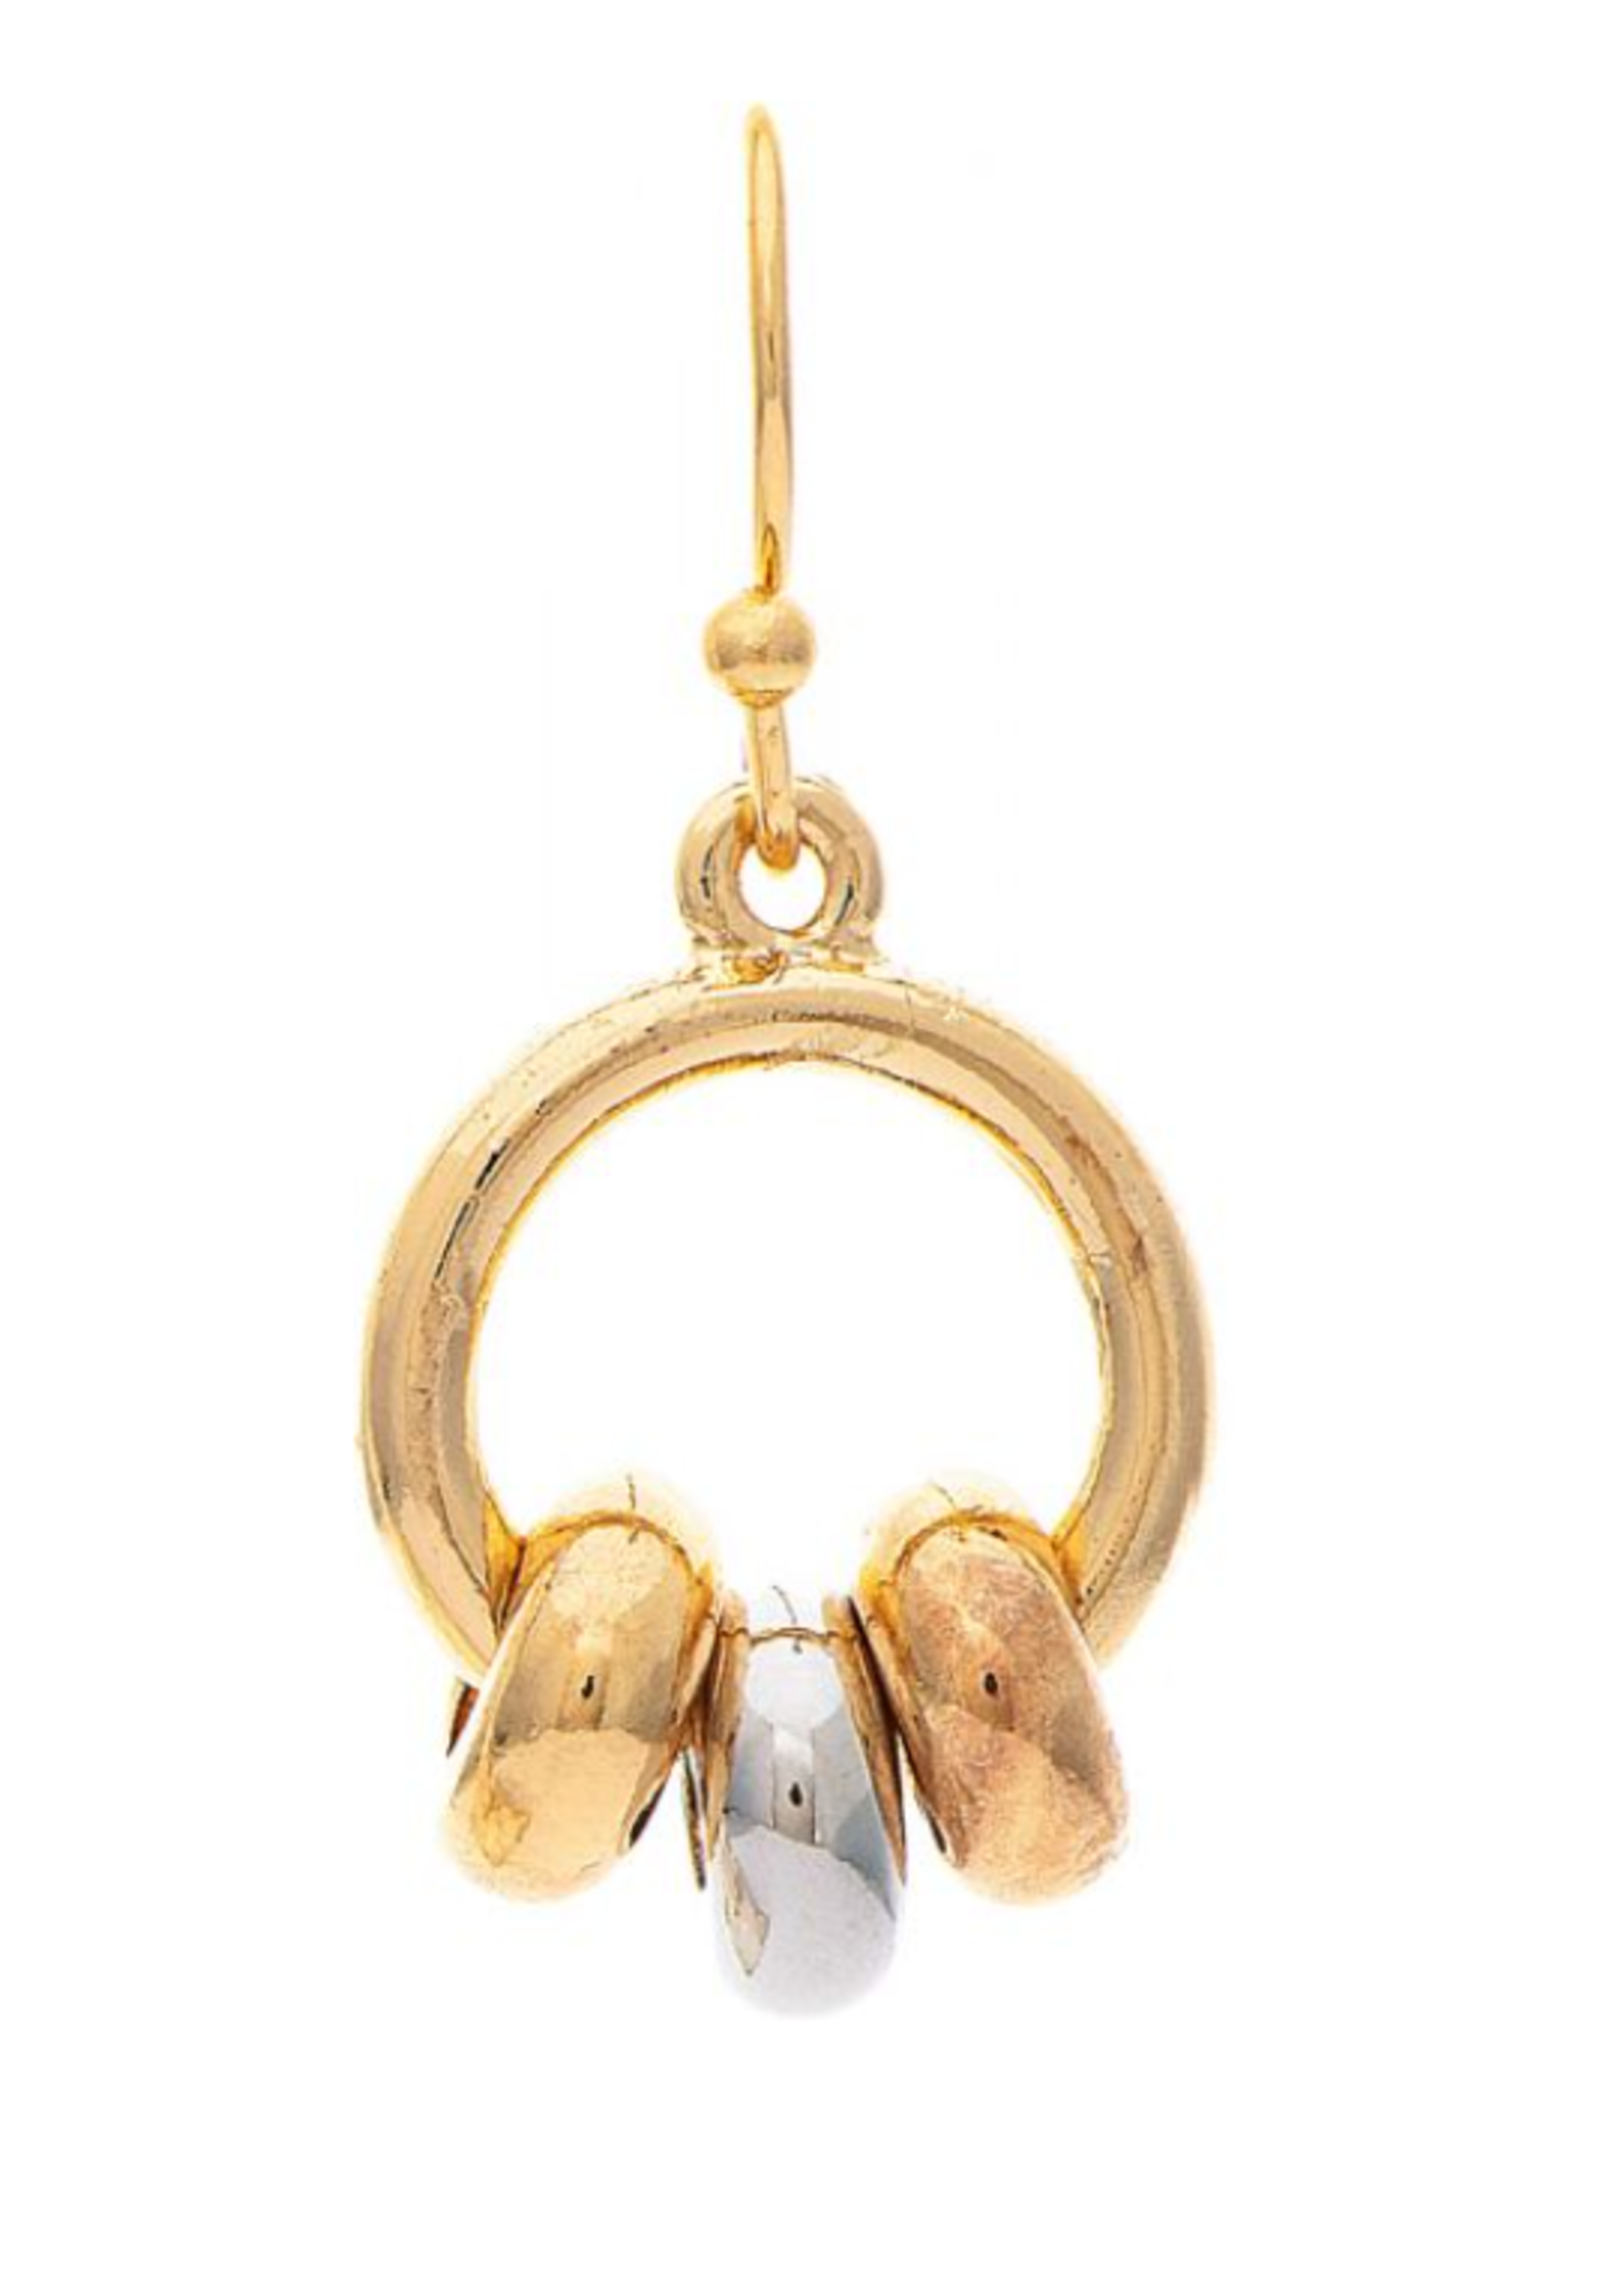 Rain Jewelry Gold Ringa Linga Ling Rings Earring